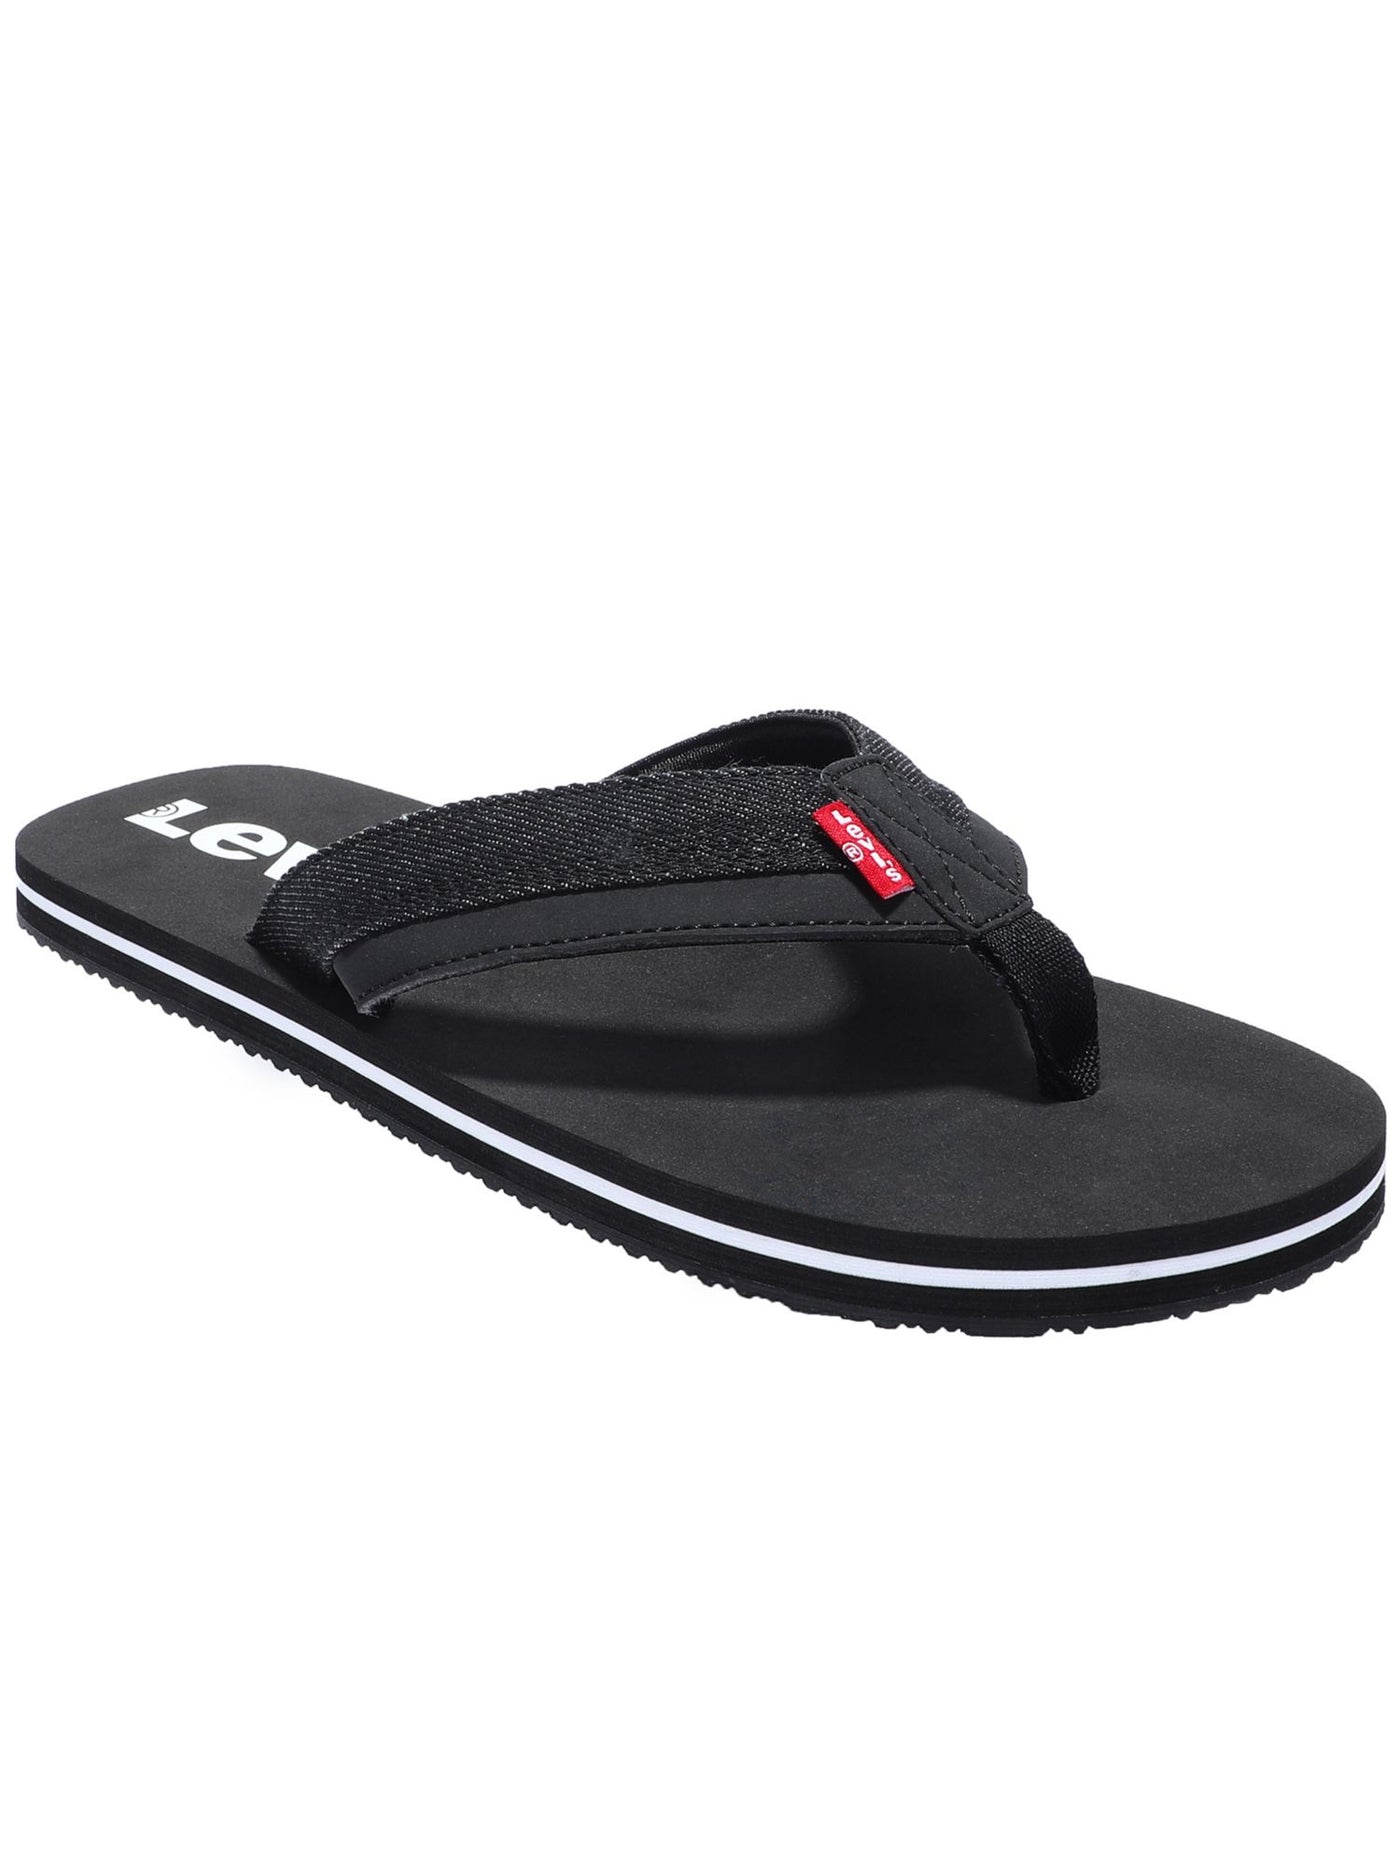 LEVI'S Mens Black Mixed Media Padded Wordmark Round Toe Slip On Thong Sandals Shoes 9